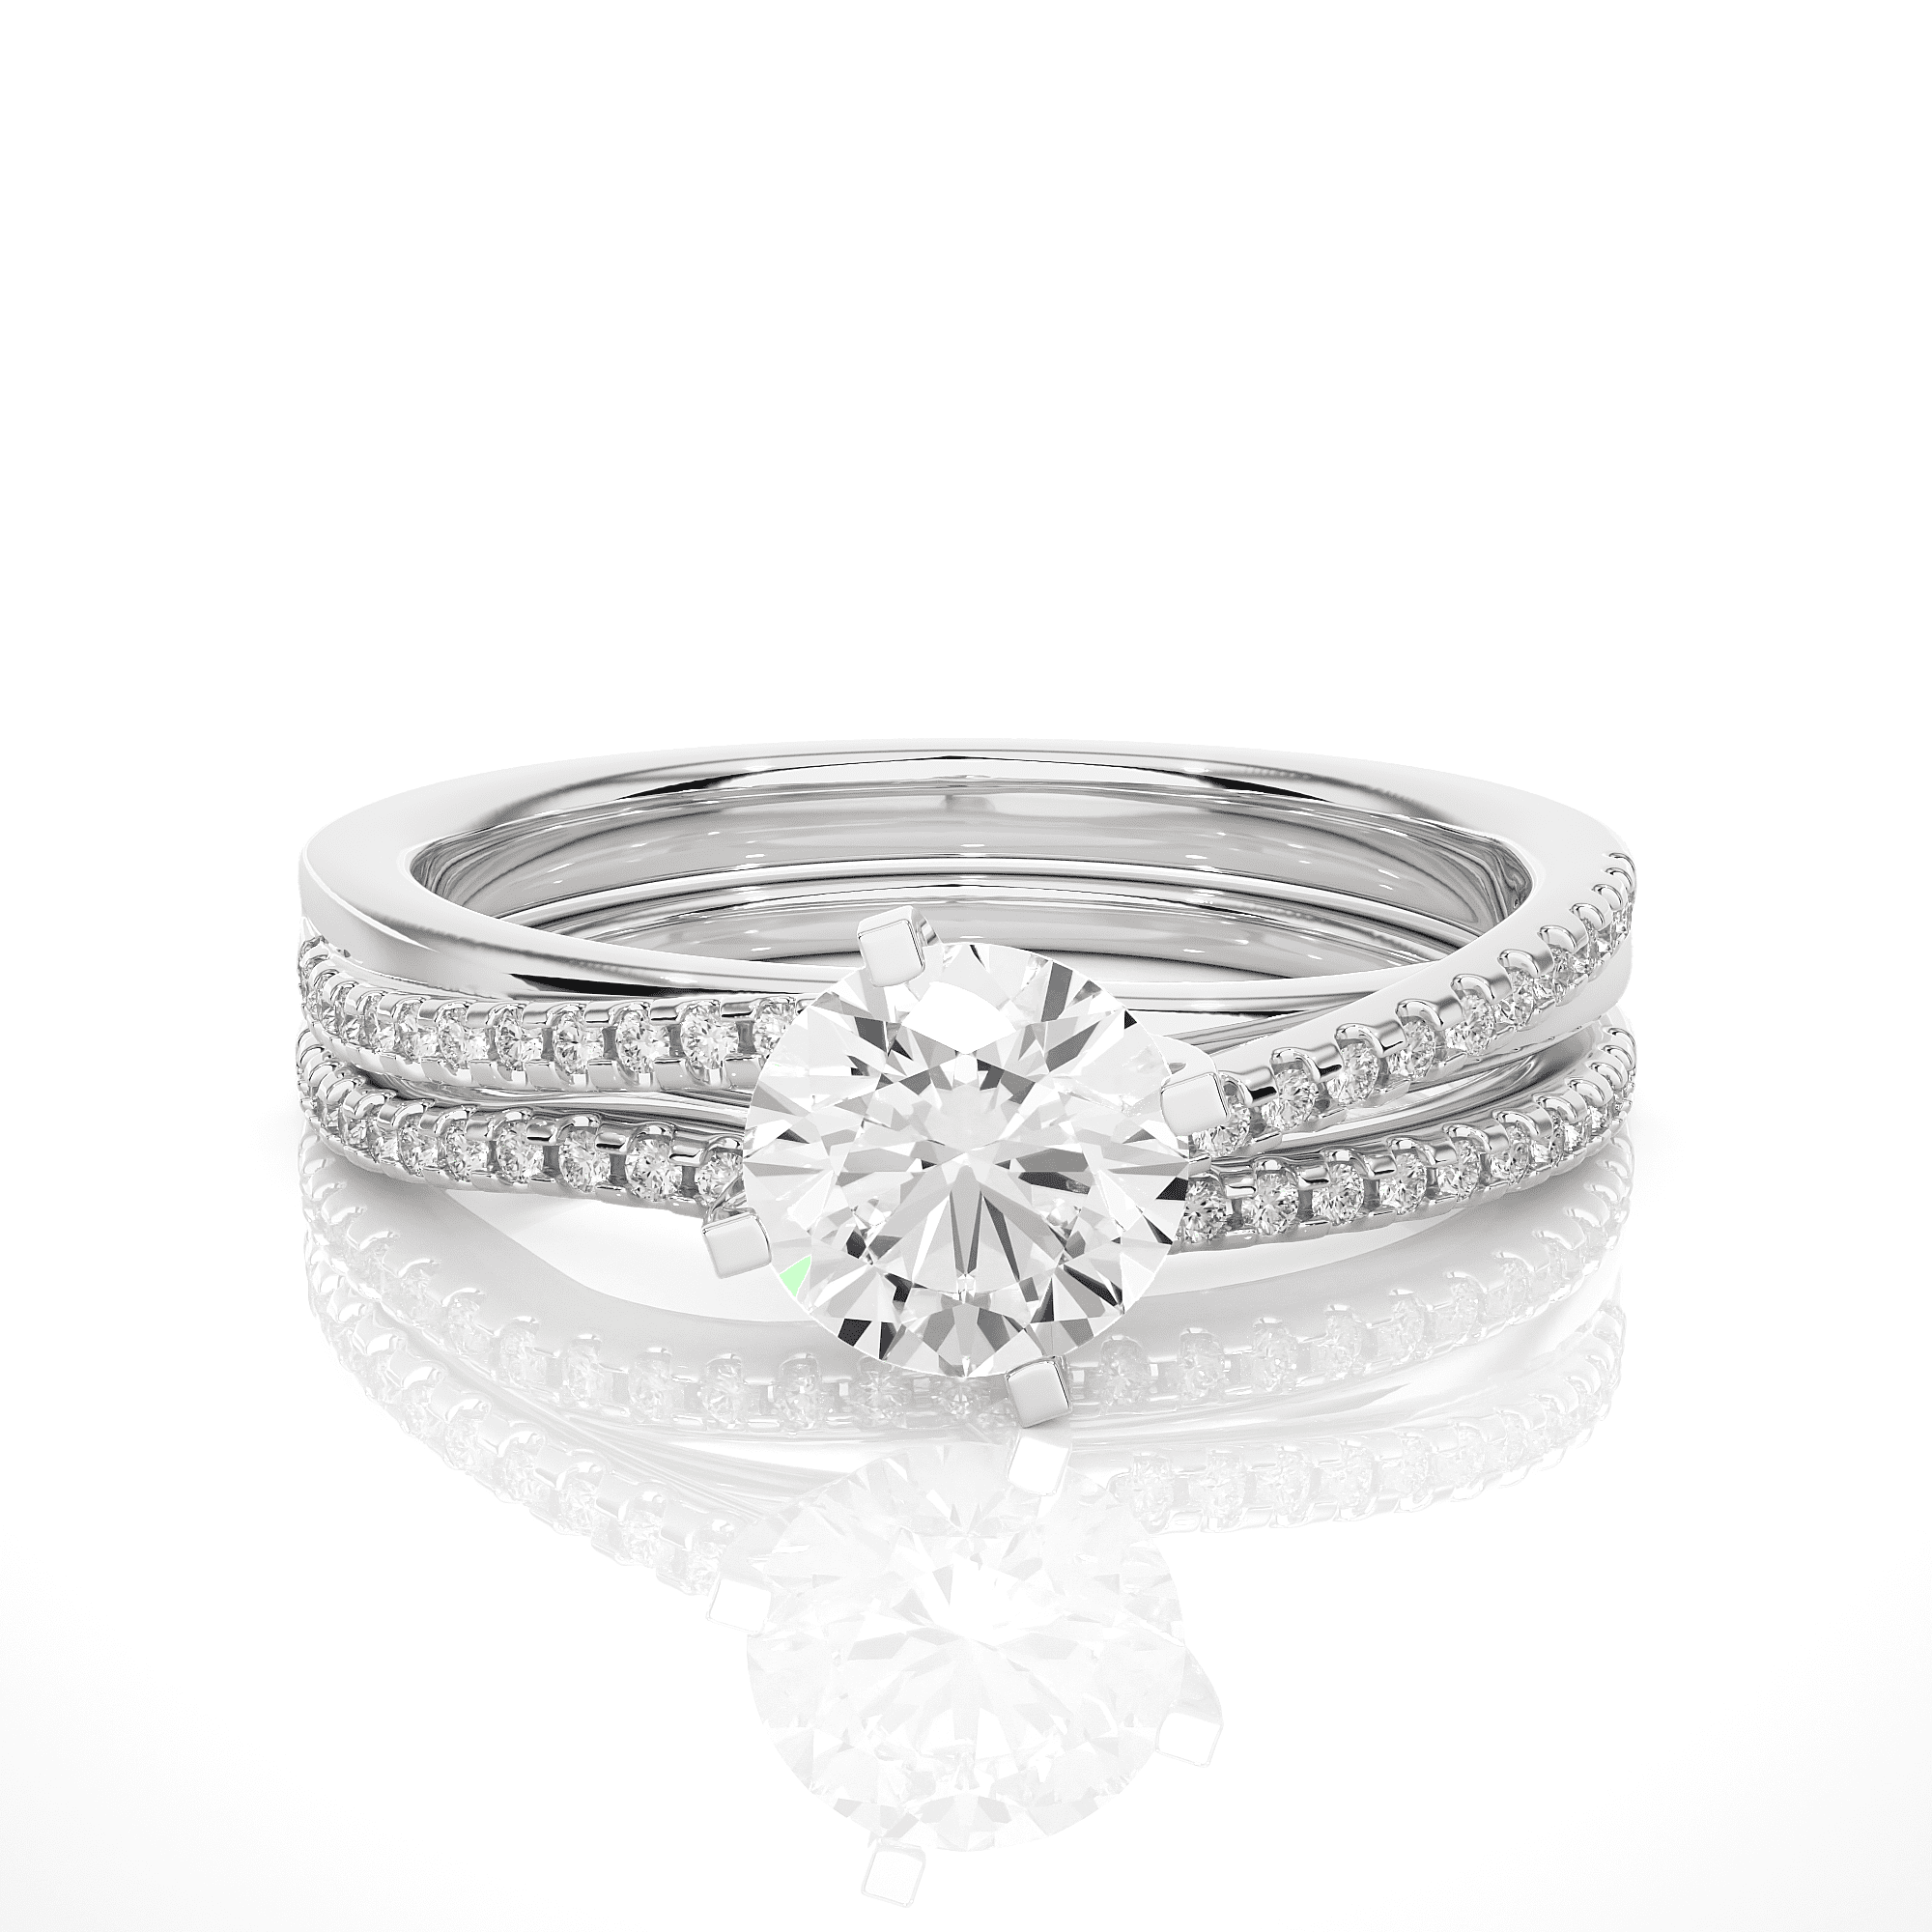 Margaret Ring - Solitaire Diamond Ring